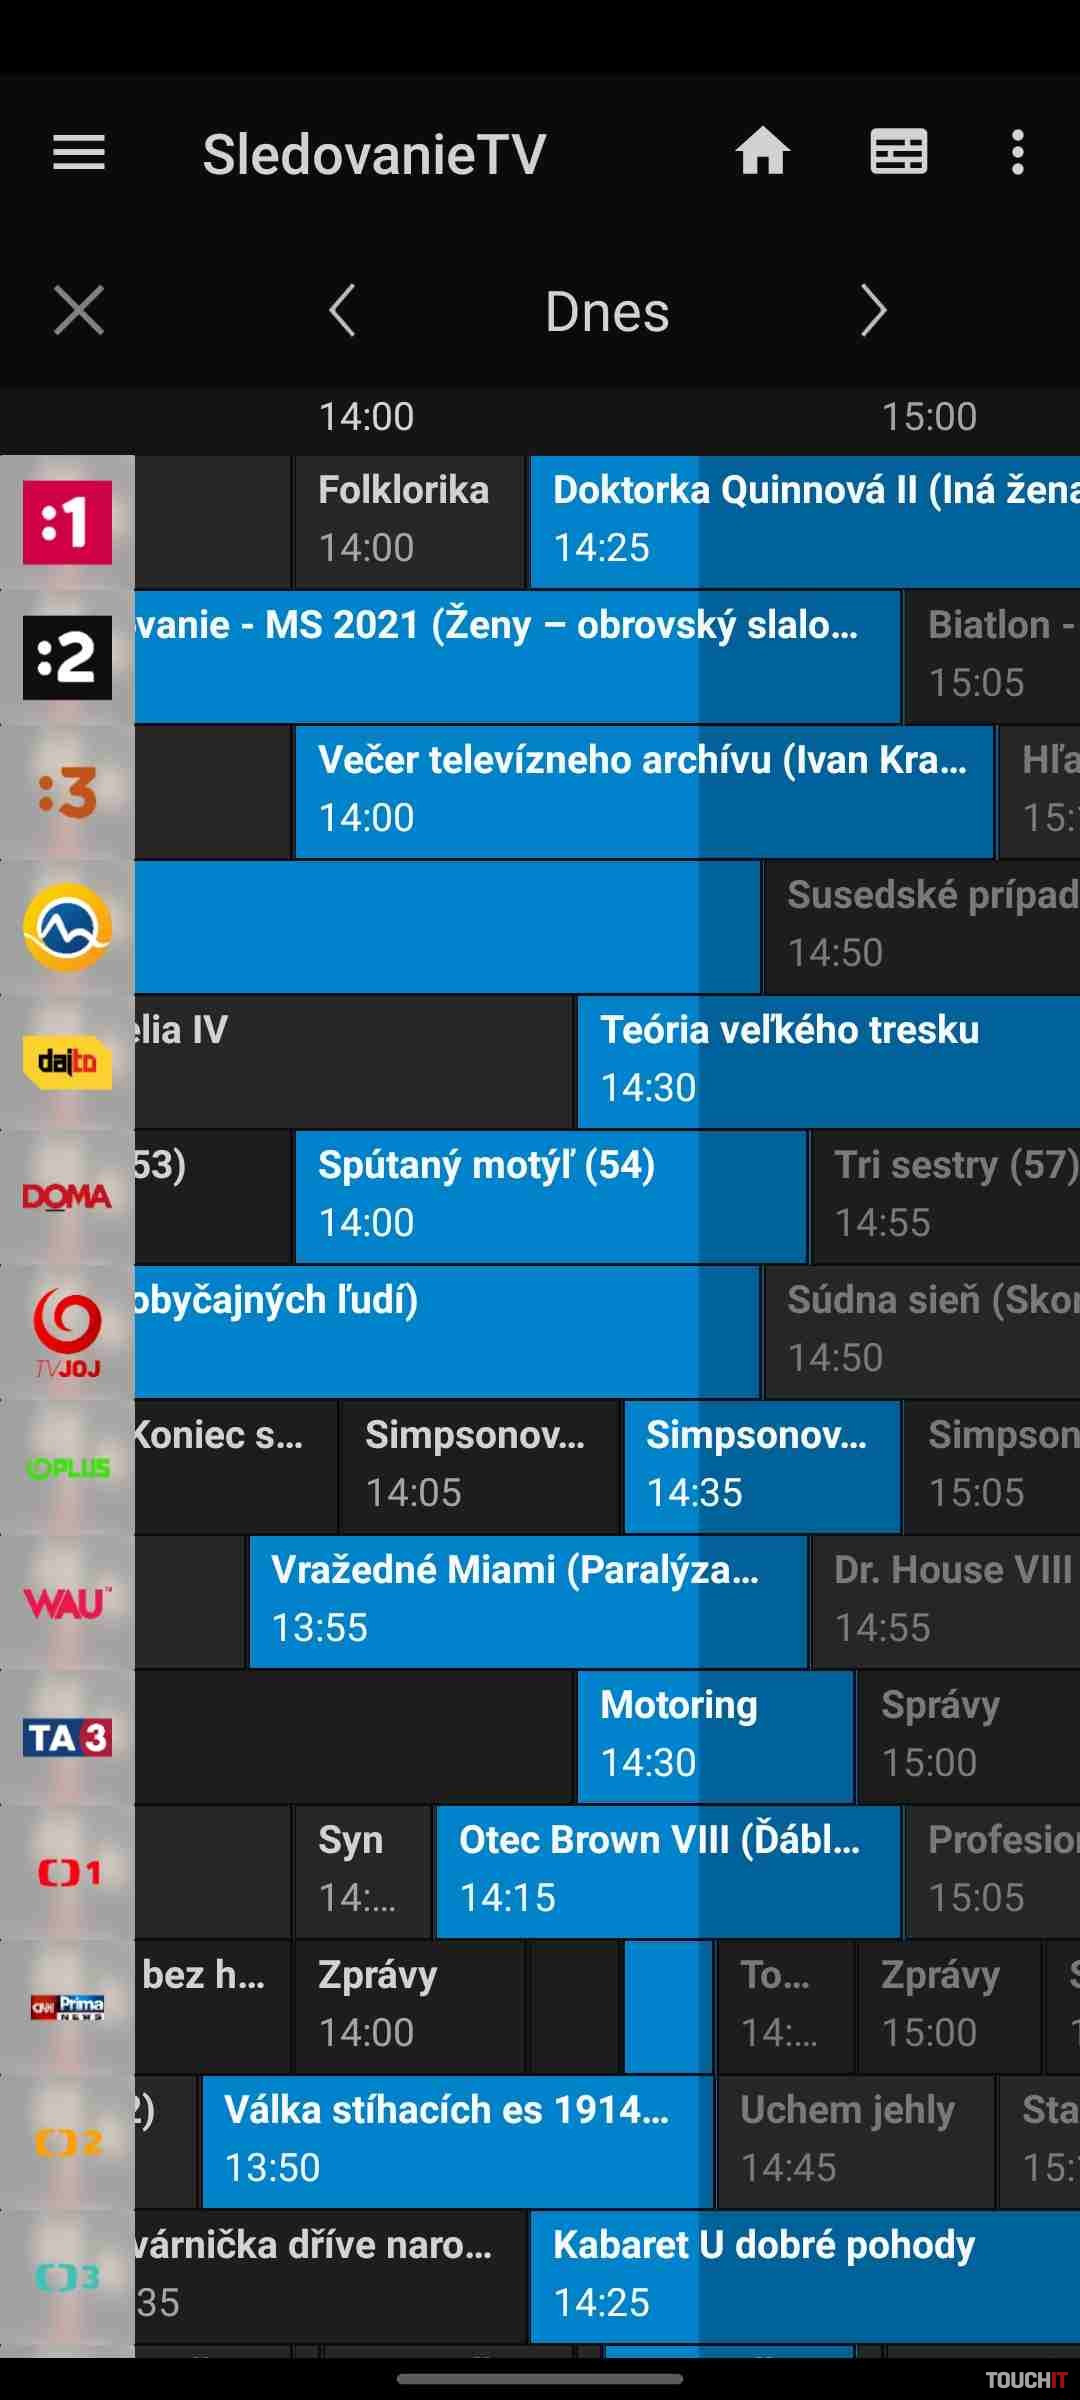 Sledovanie.TV